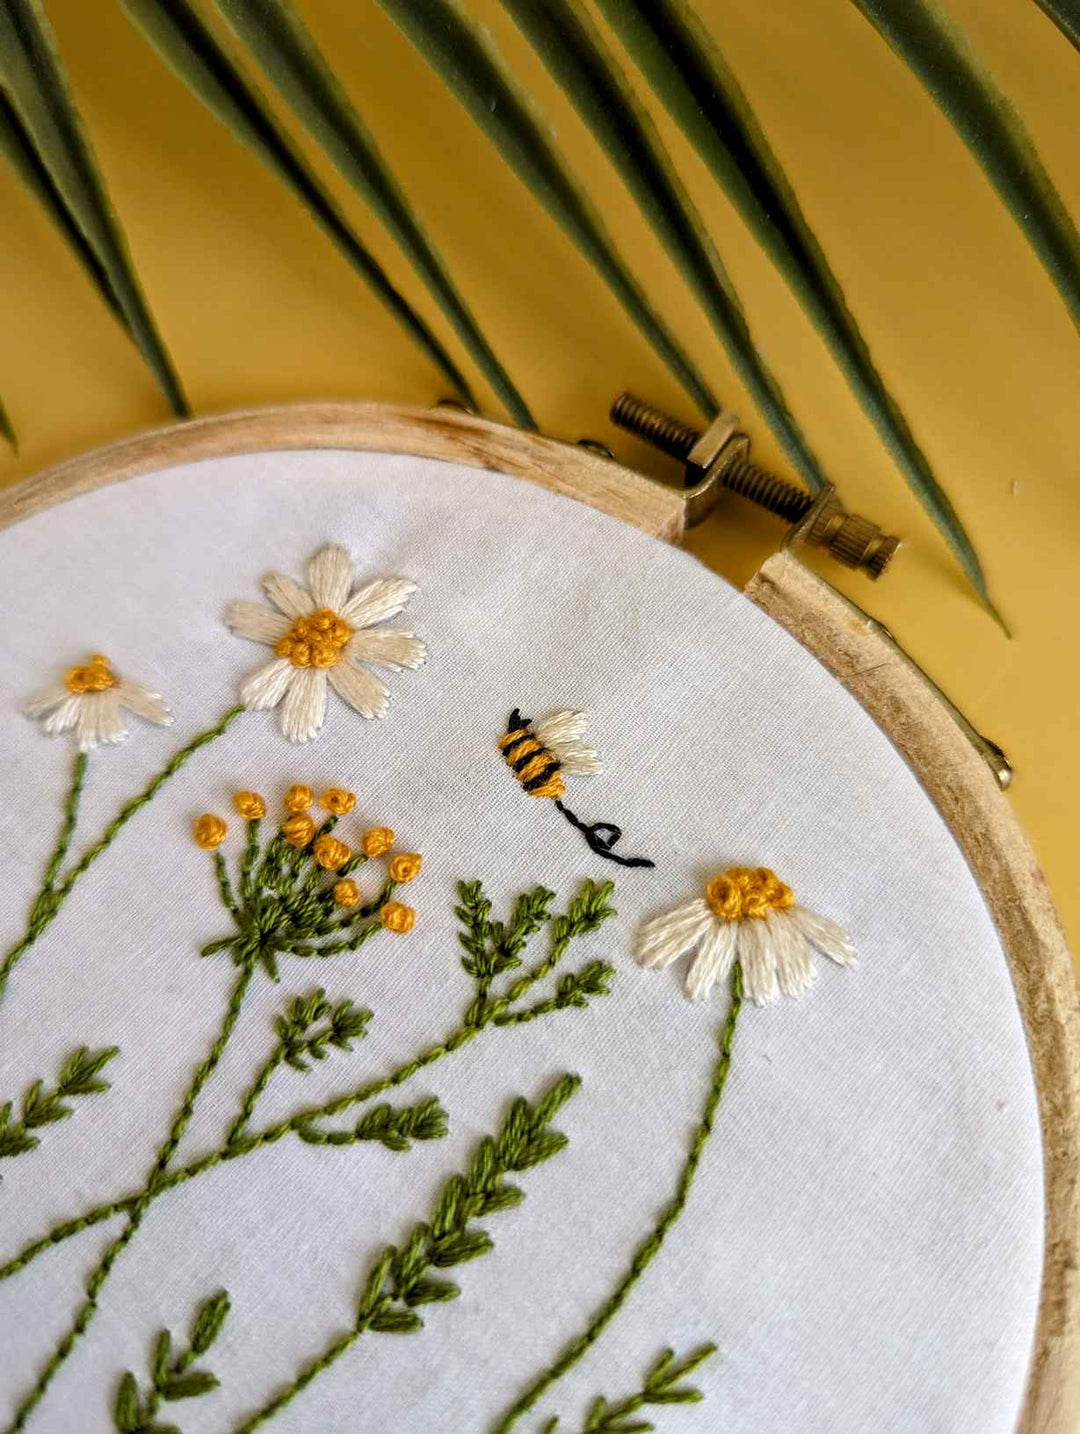 Wild Flowers (White)- Embroidery Kit